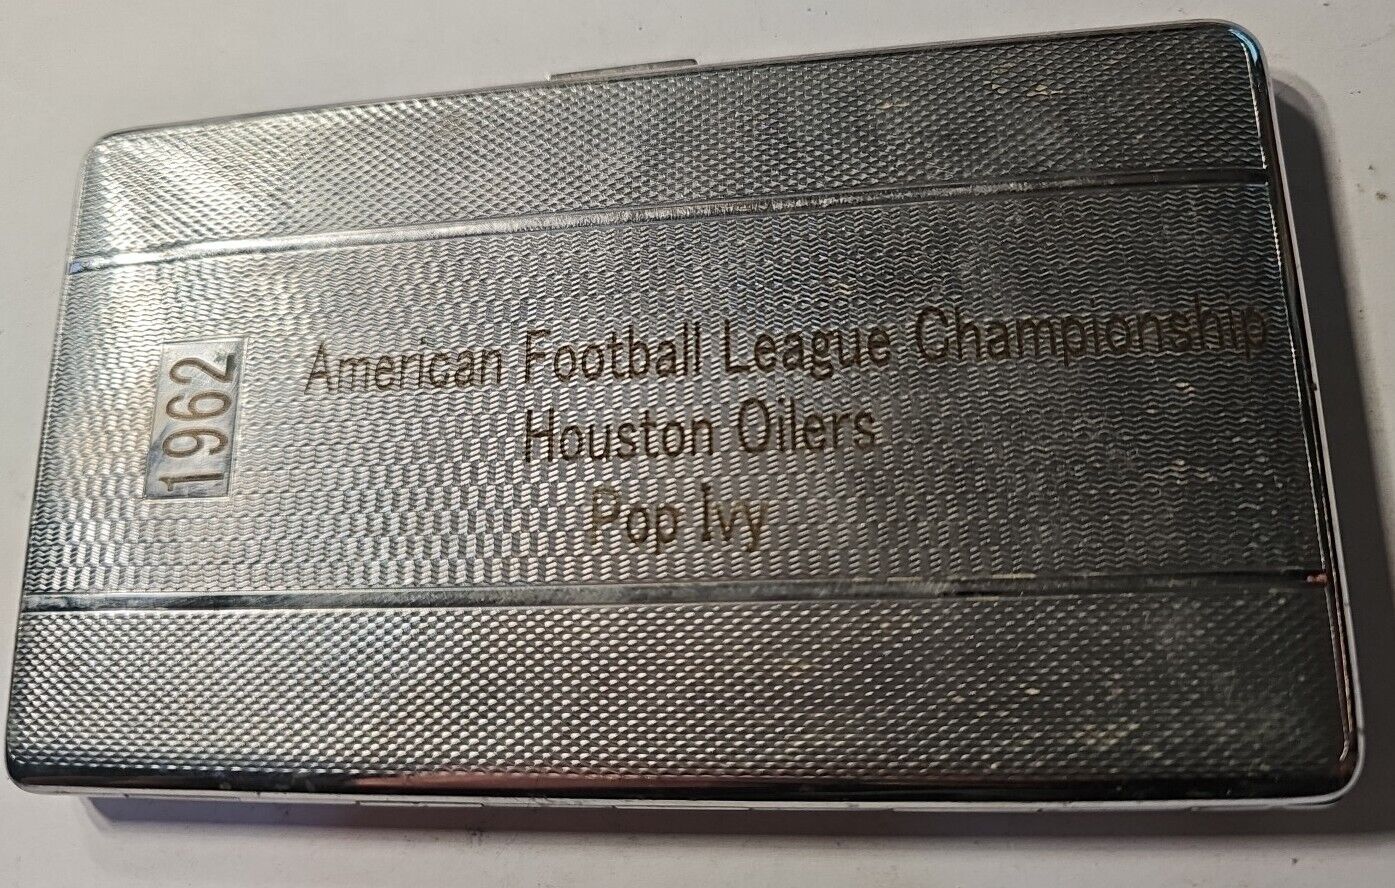 1962  American Football league Houston Oilers team Pop Ivy Cigarette case